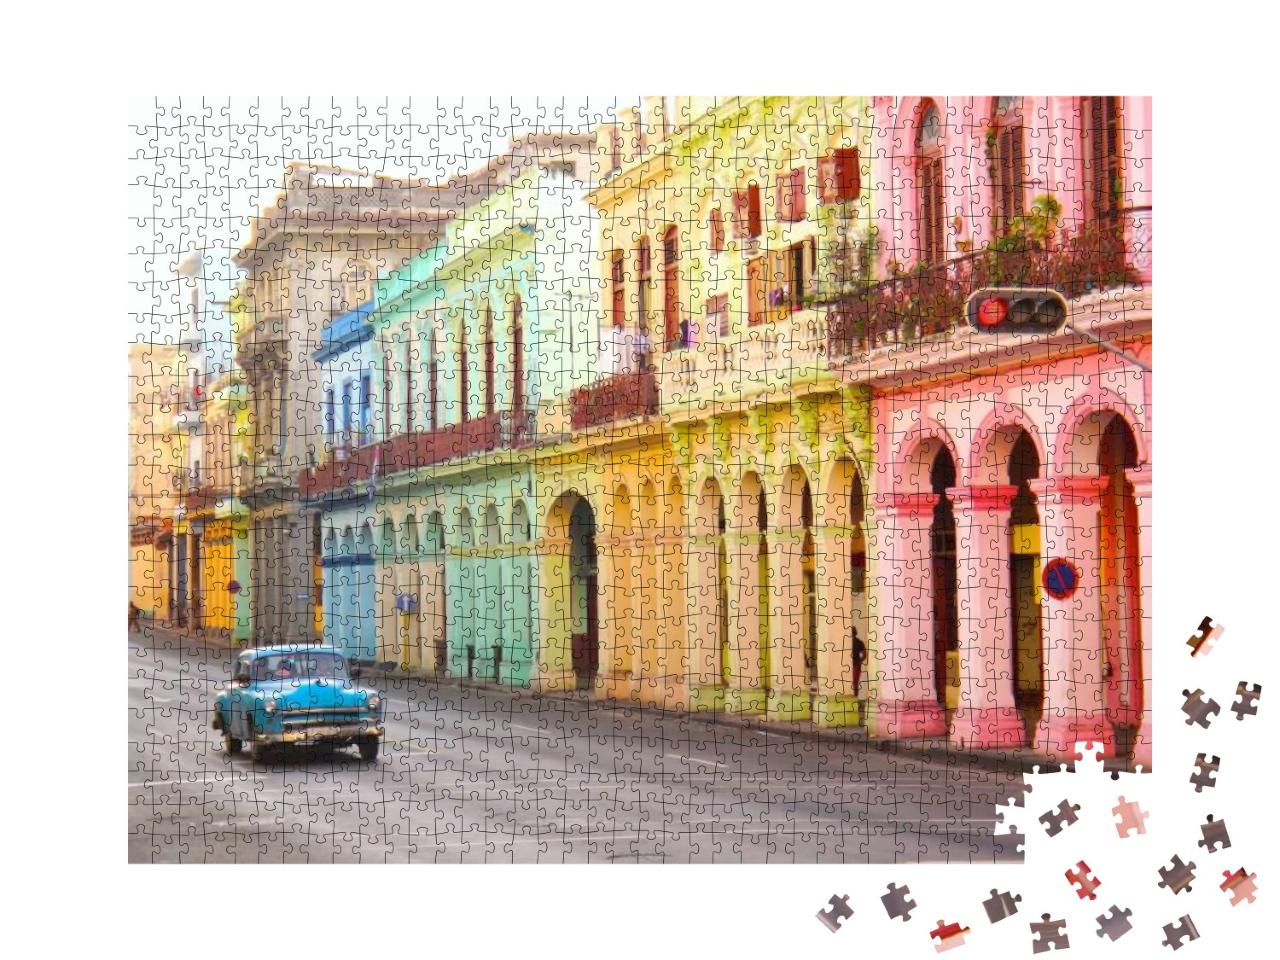 Puzzle 1000 Teile „Habana, Kuba“